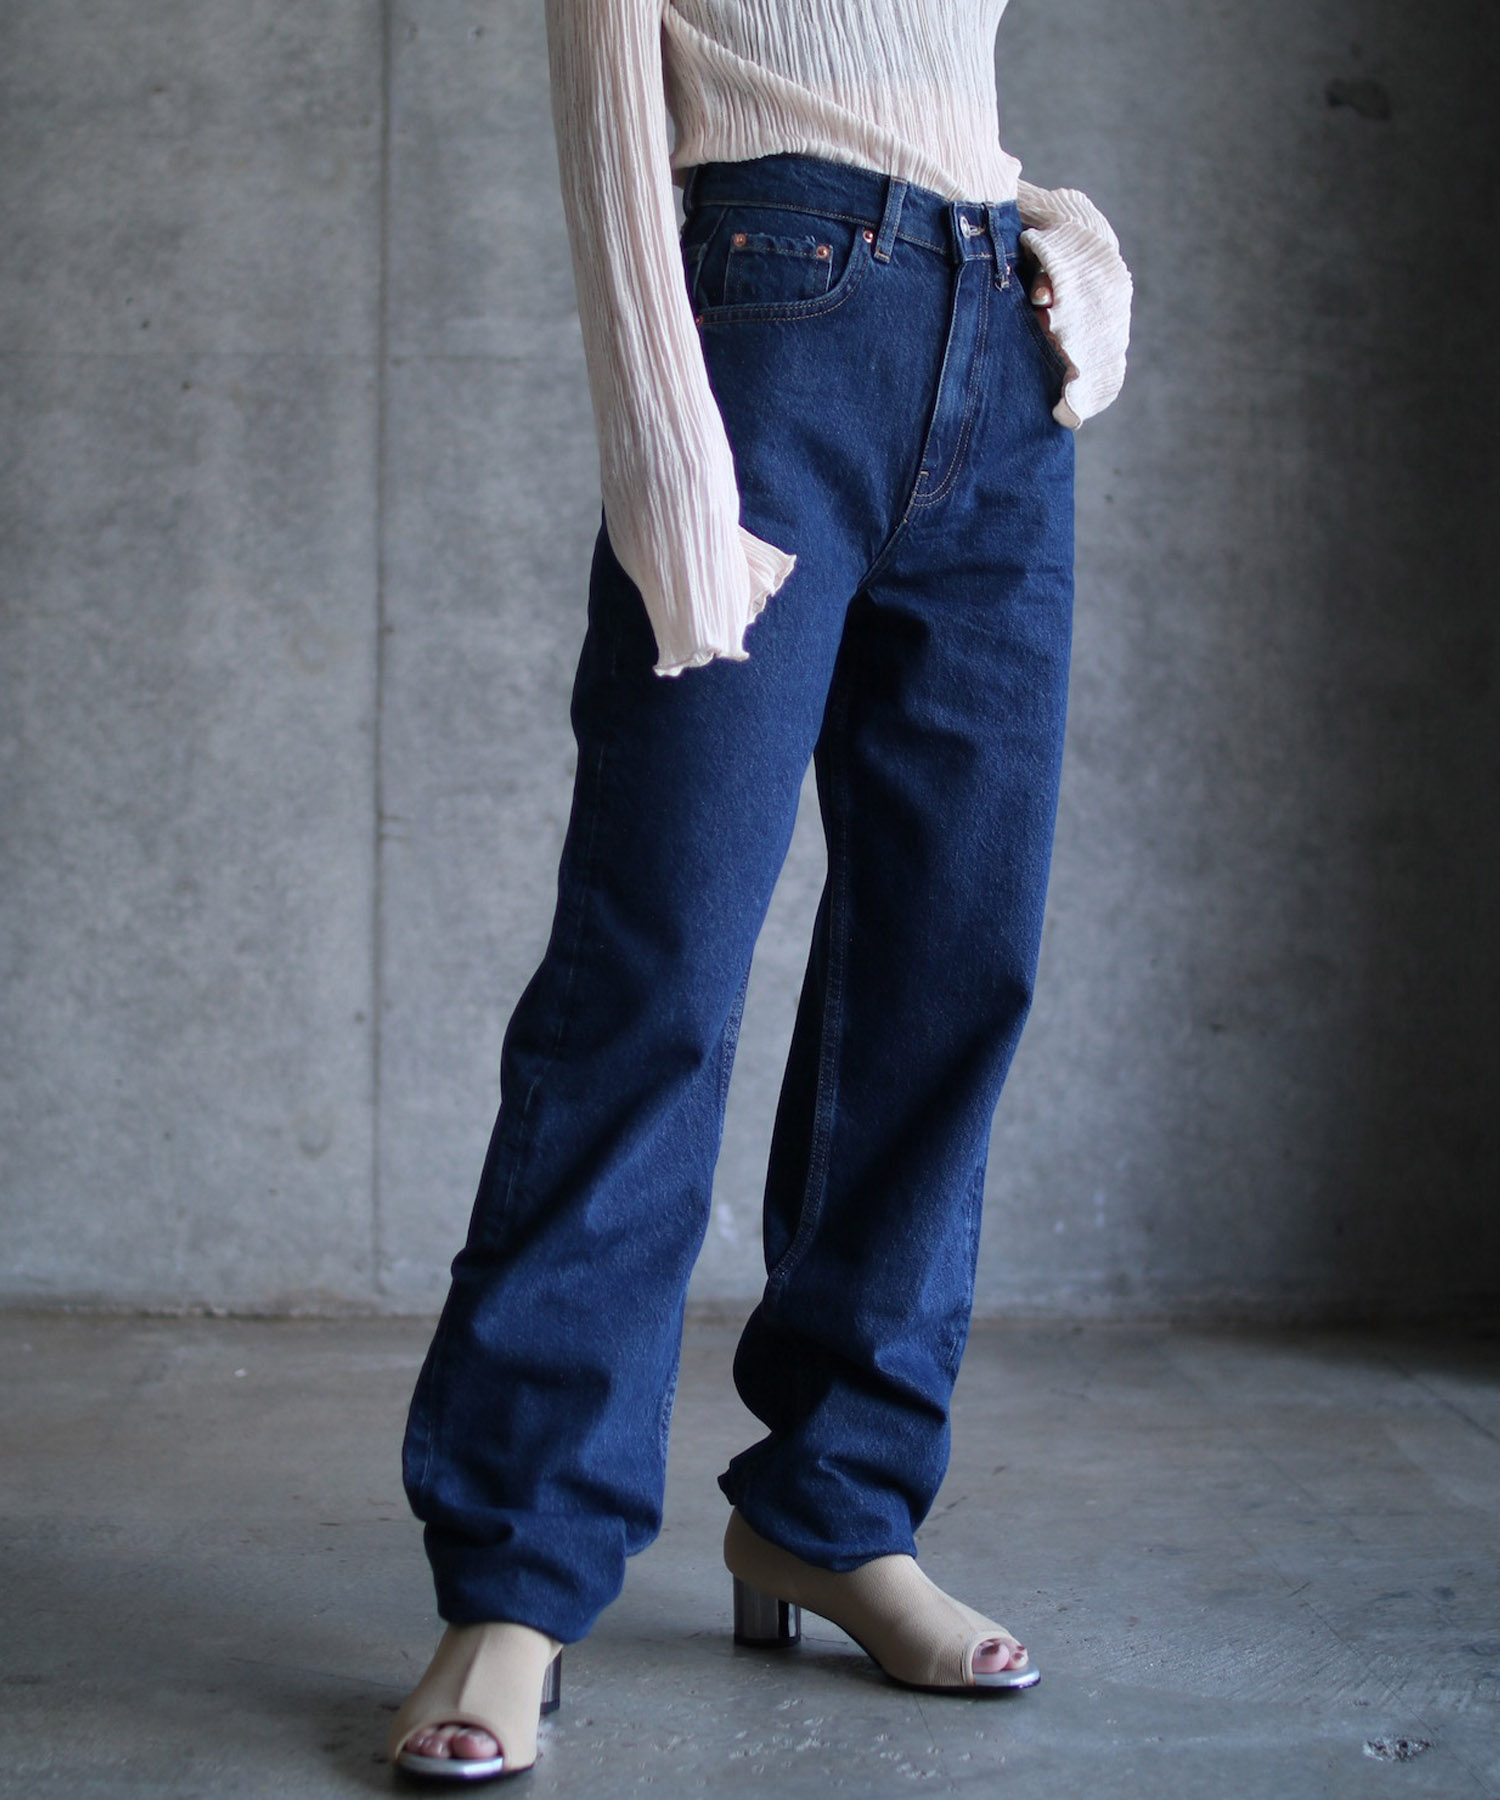 90's highwaist jeans